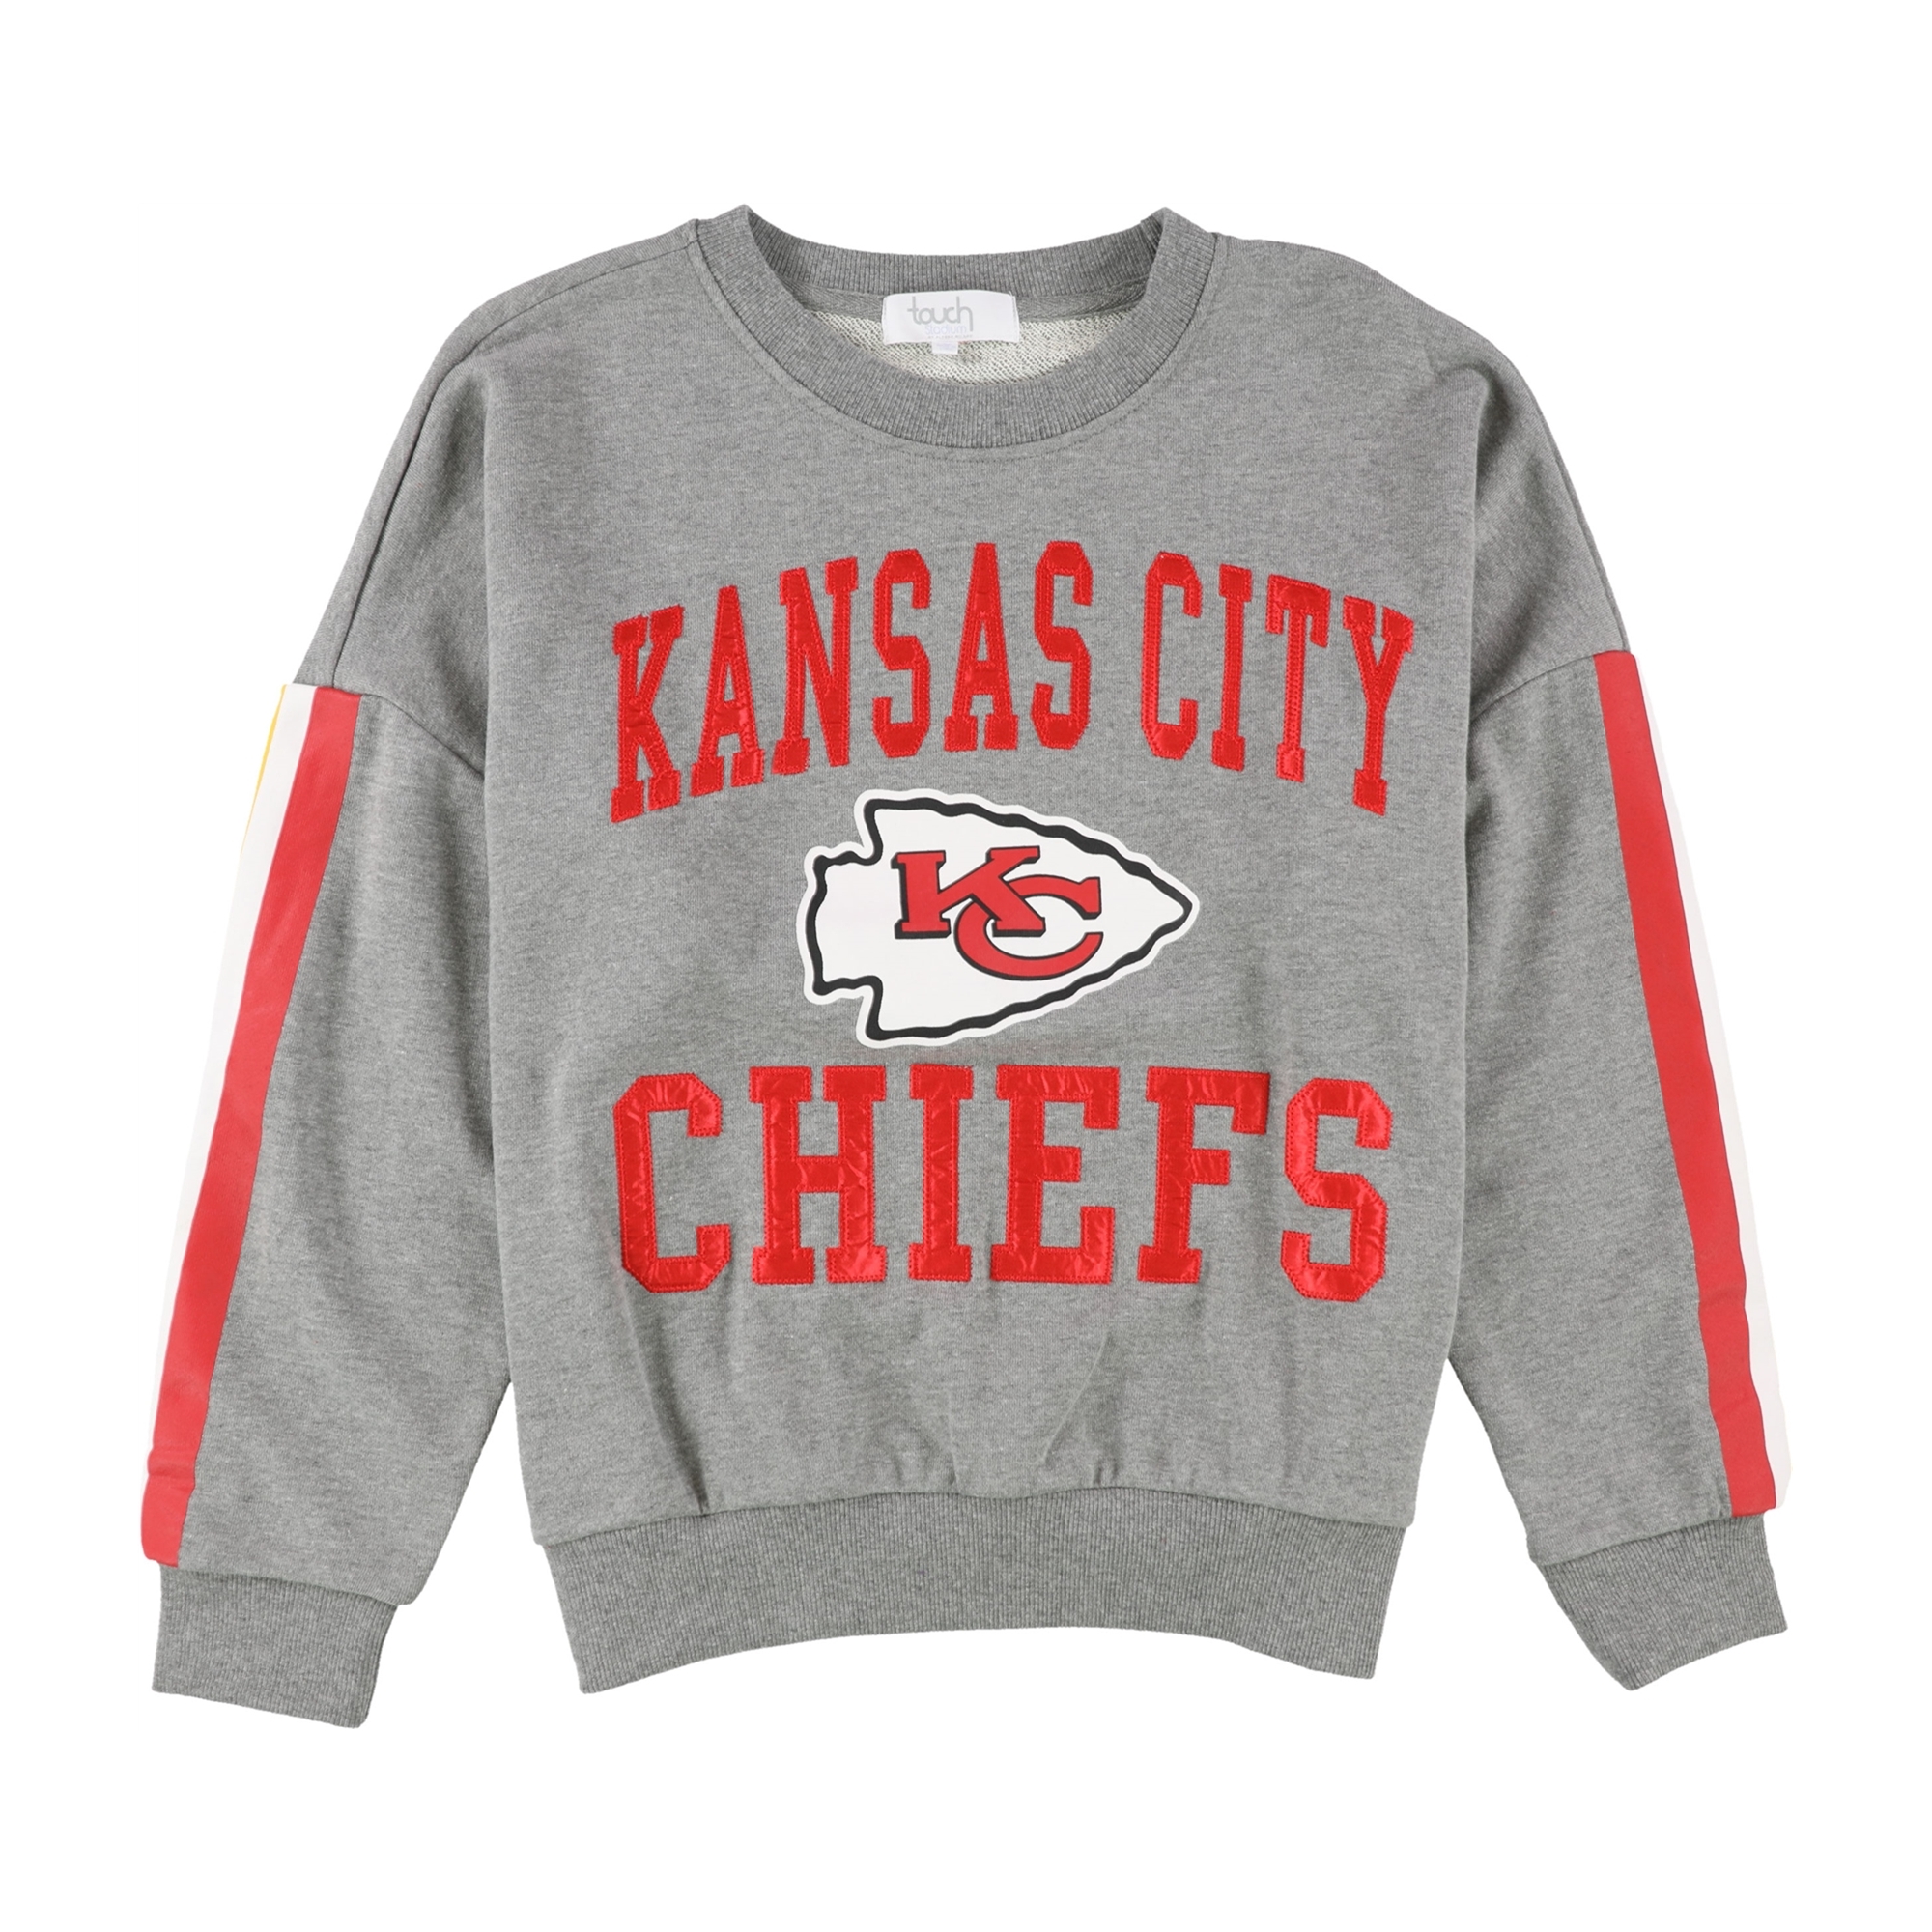 Buy a Touch Womens Kansas City Chiefs Sweatshirt